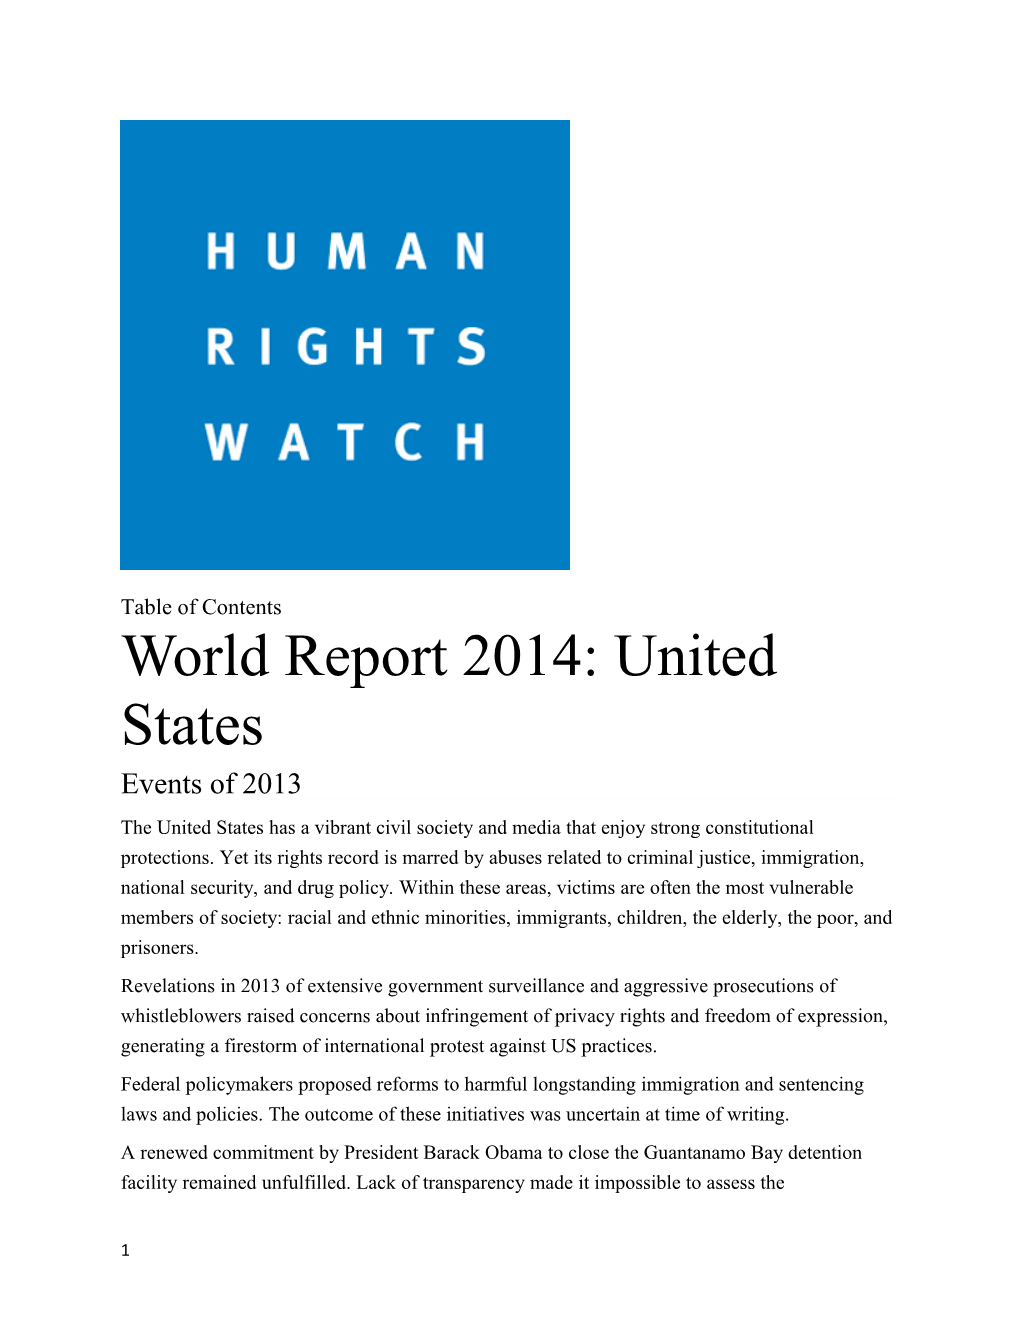 World Report 2014: United States